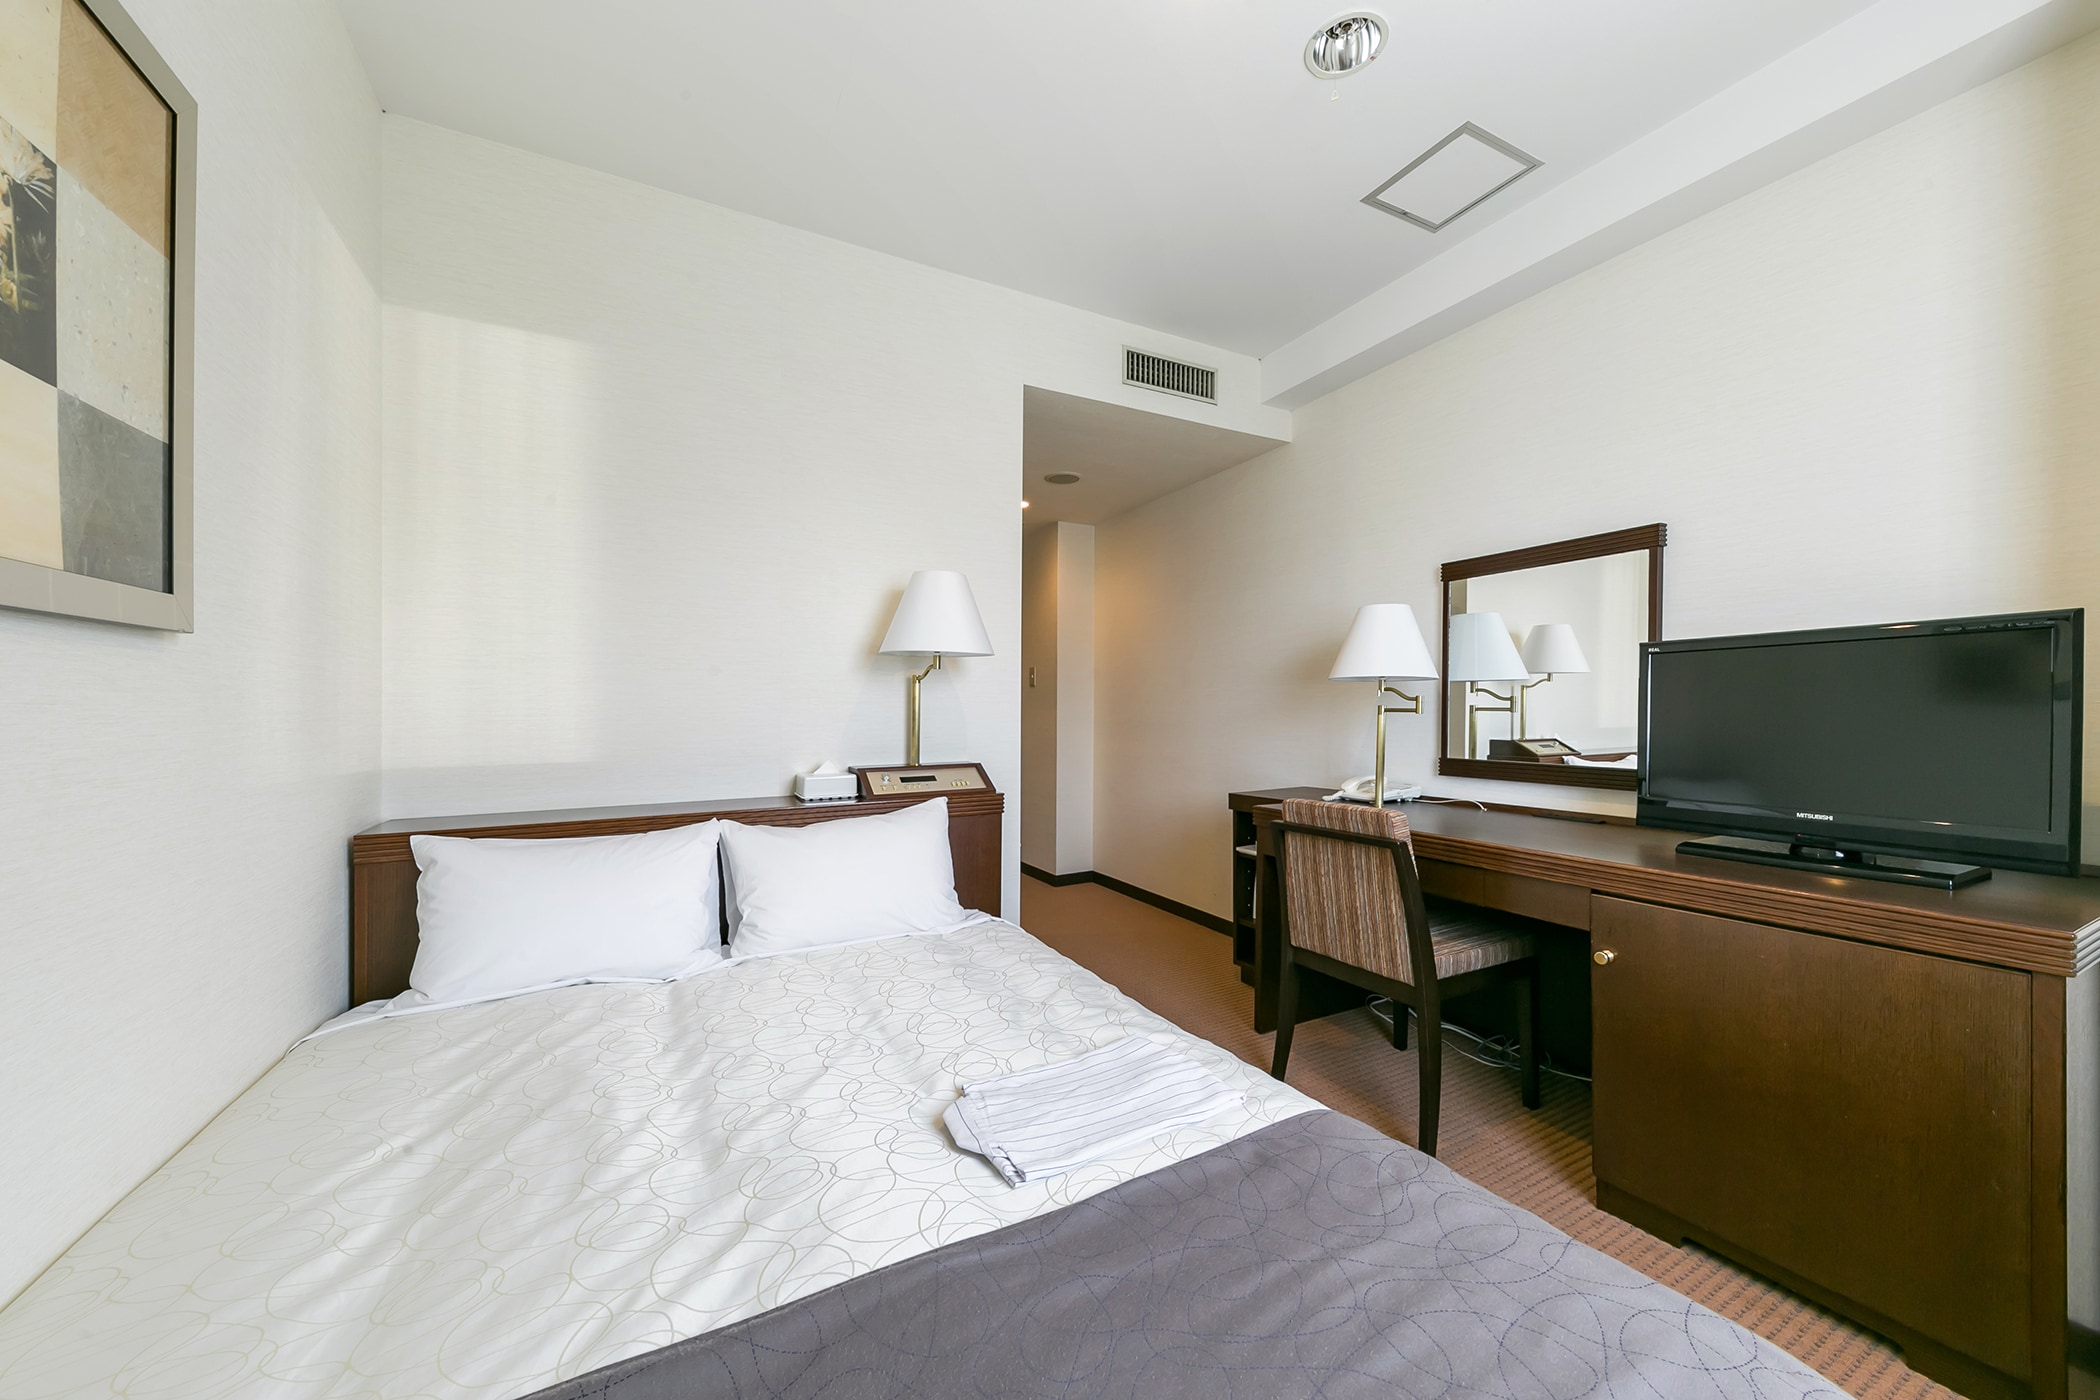 Single room (semi-double room) 15.1 sqm / 140 cm wide bed